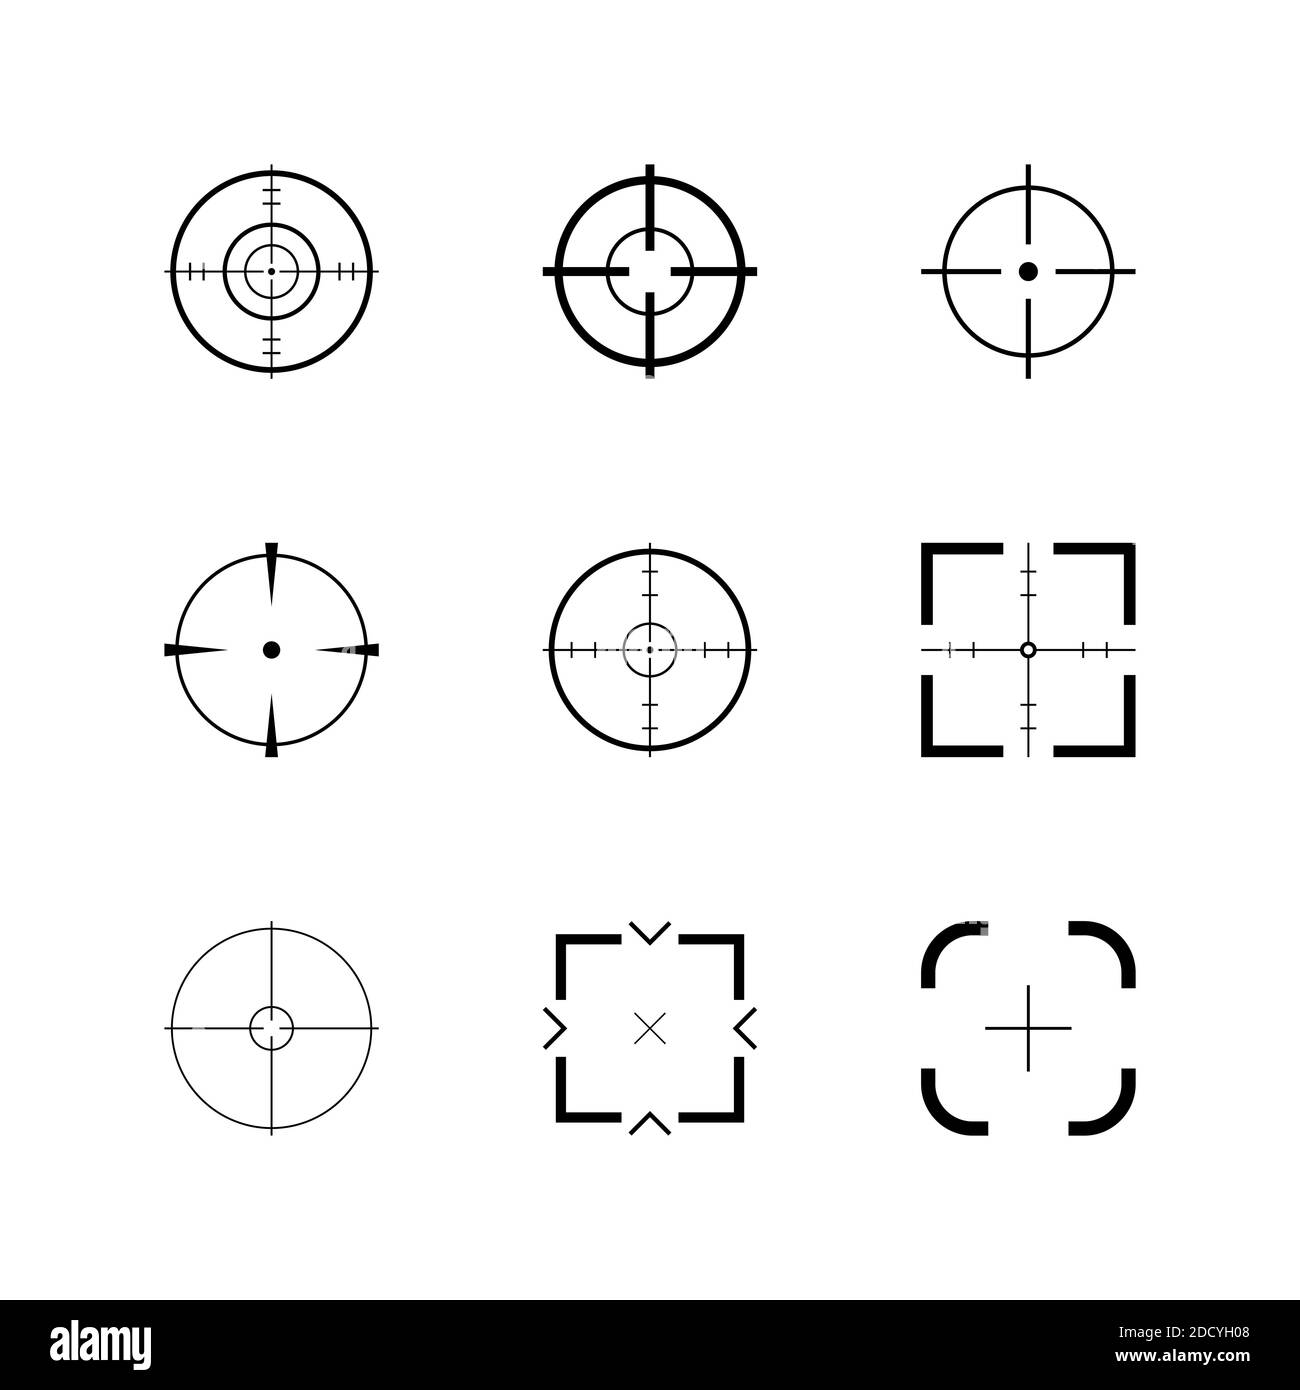 Crosshair, gun weapon sight, targets icon set. Flat style illustration isolated on white. Stock Photo